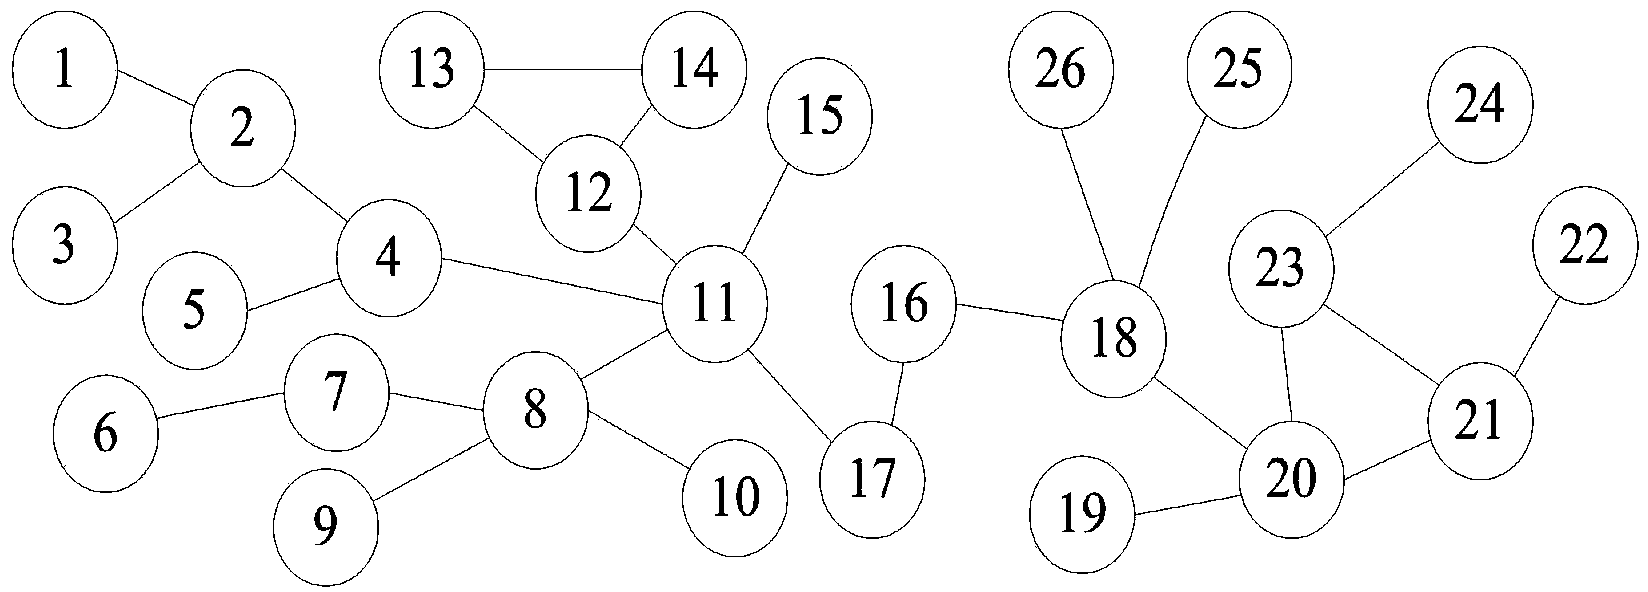 Social network false information control method based on clonal selection algorithm